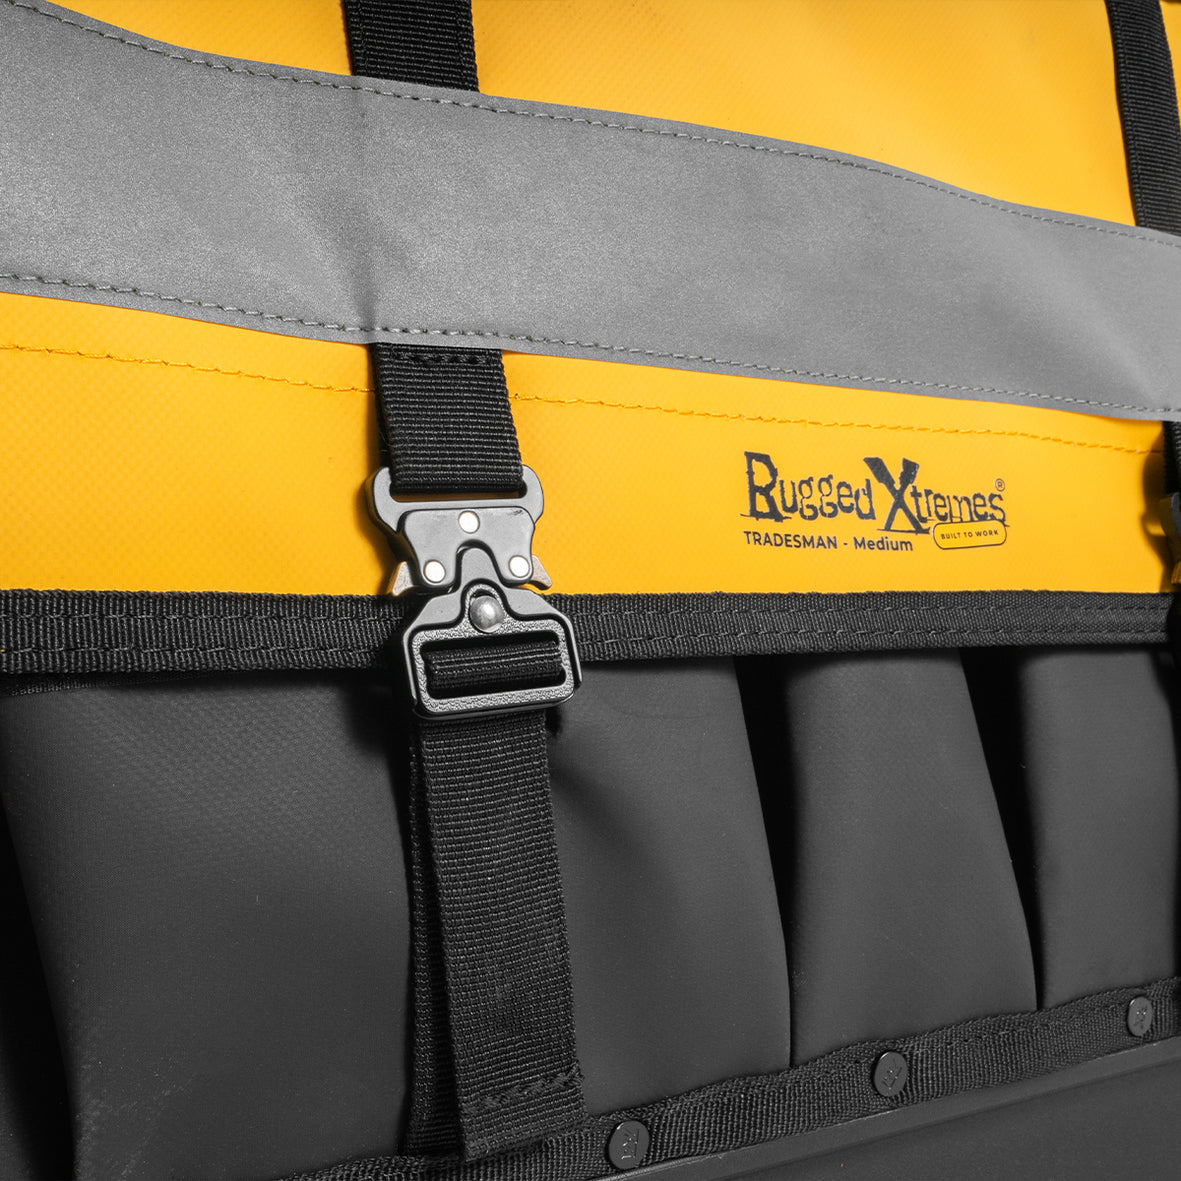 Tradesman PVC Tool Bag RX05J5020YEBK by Rugged Xtremes